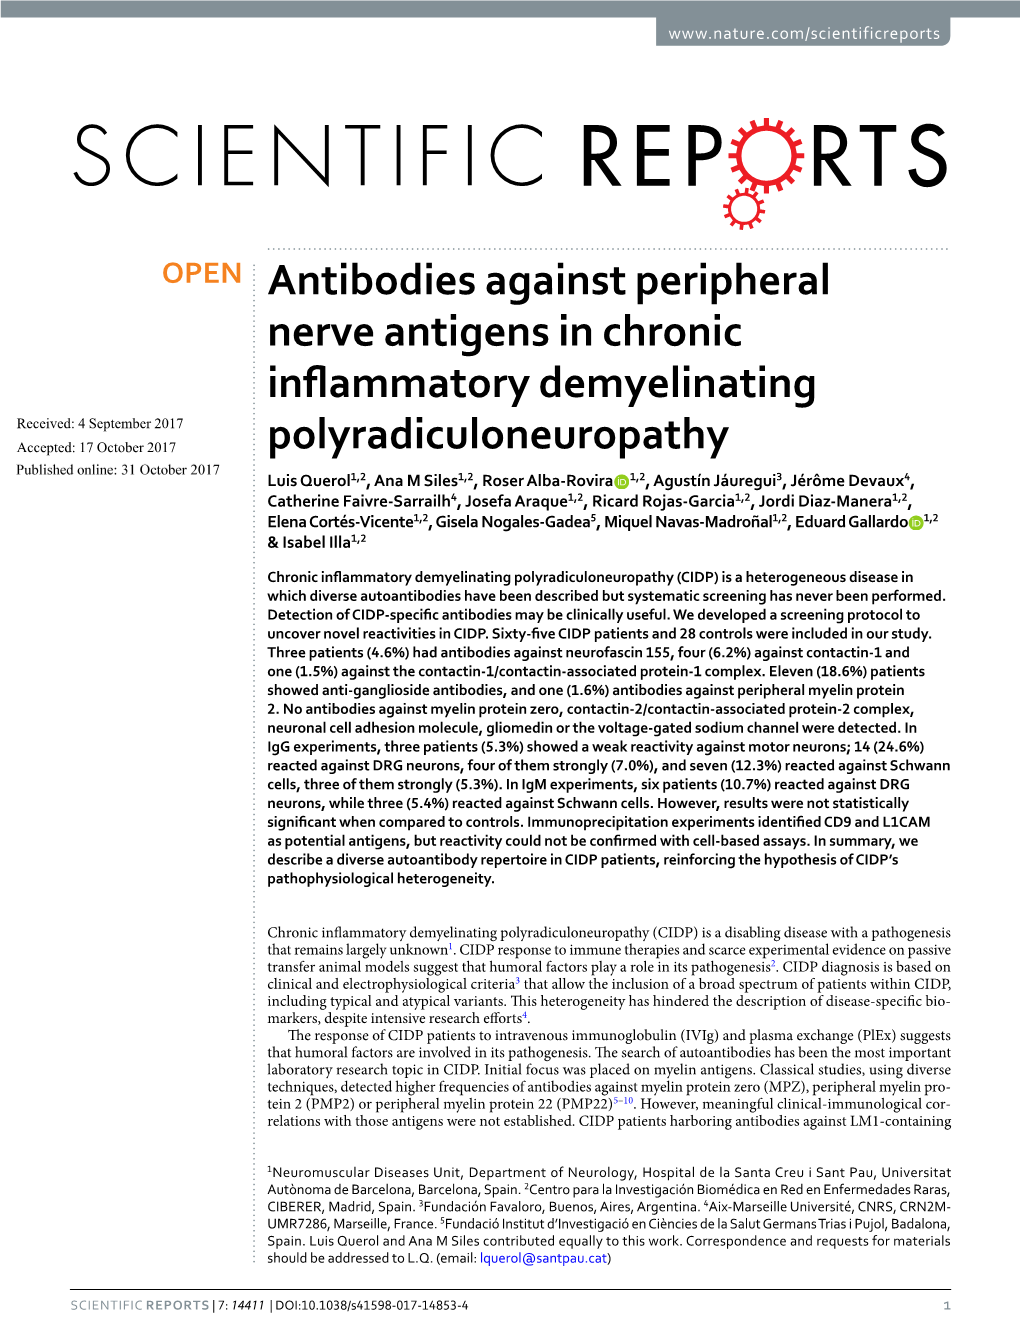 Antibodies Against Peripheral Nerve Antigens in Chronic Inflammatory